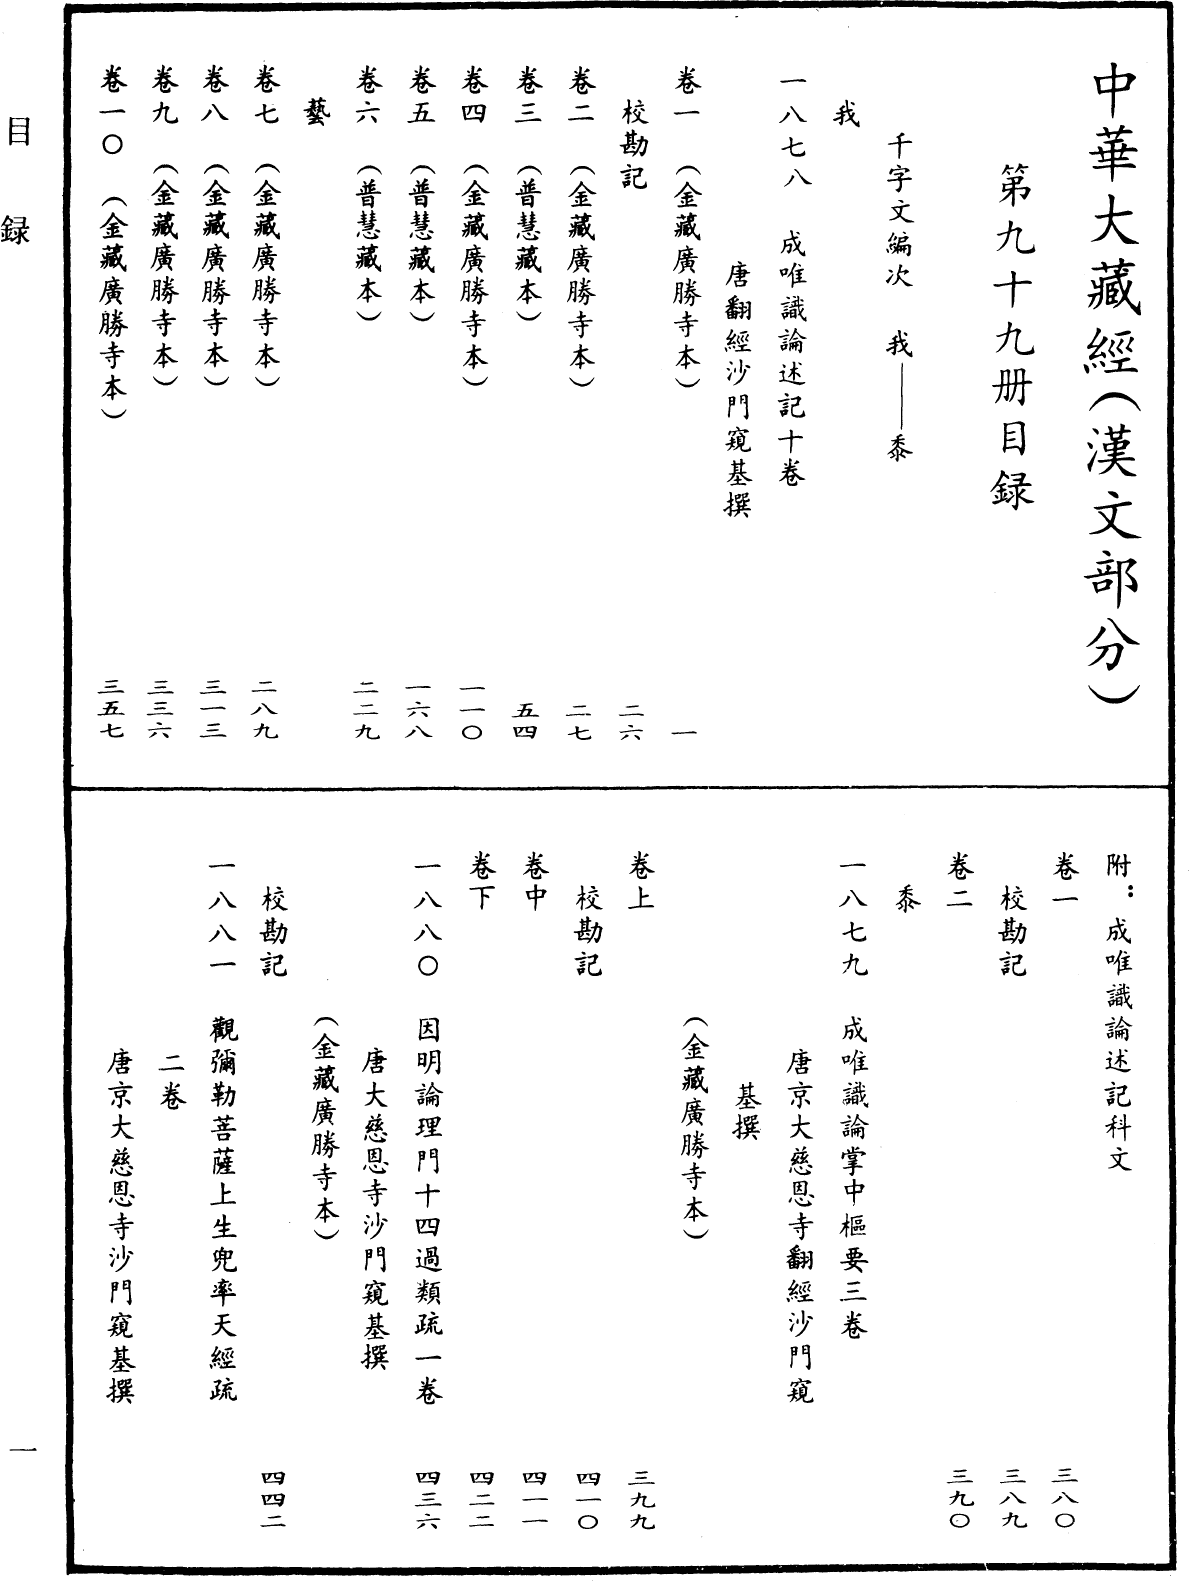 File:《中華大藏經》 第99冊 目録 (1).png